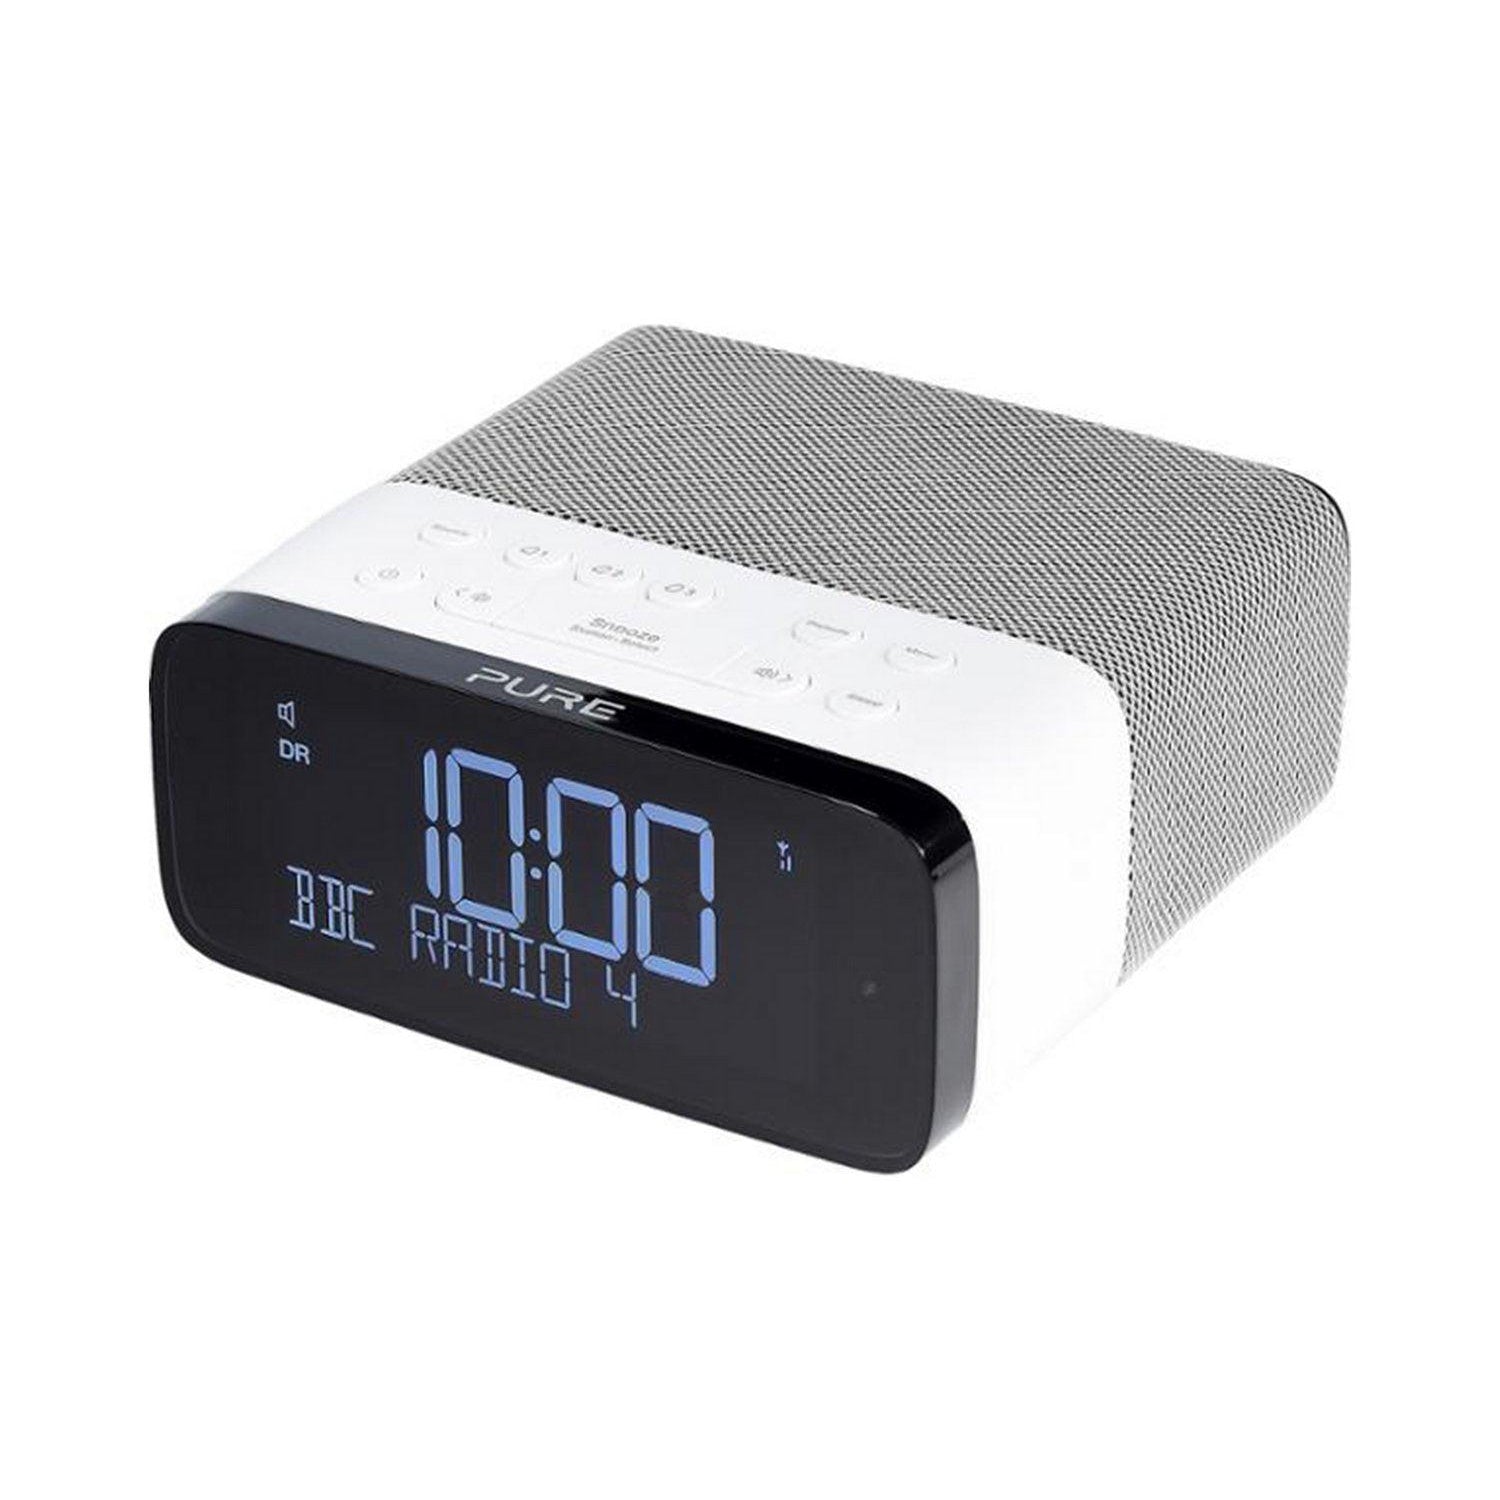 Pure Siesta Rise DAB+/FM Bedside Alarm Clock, White - Refurbished Good